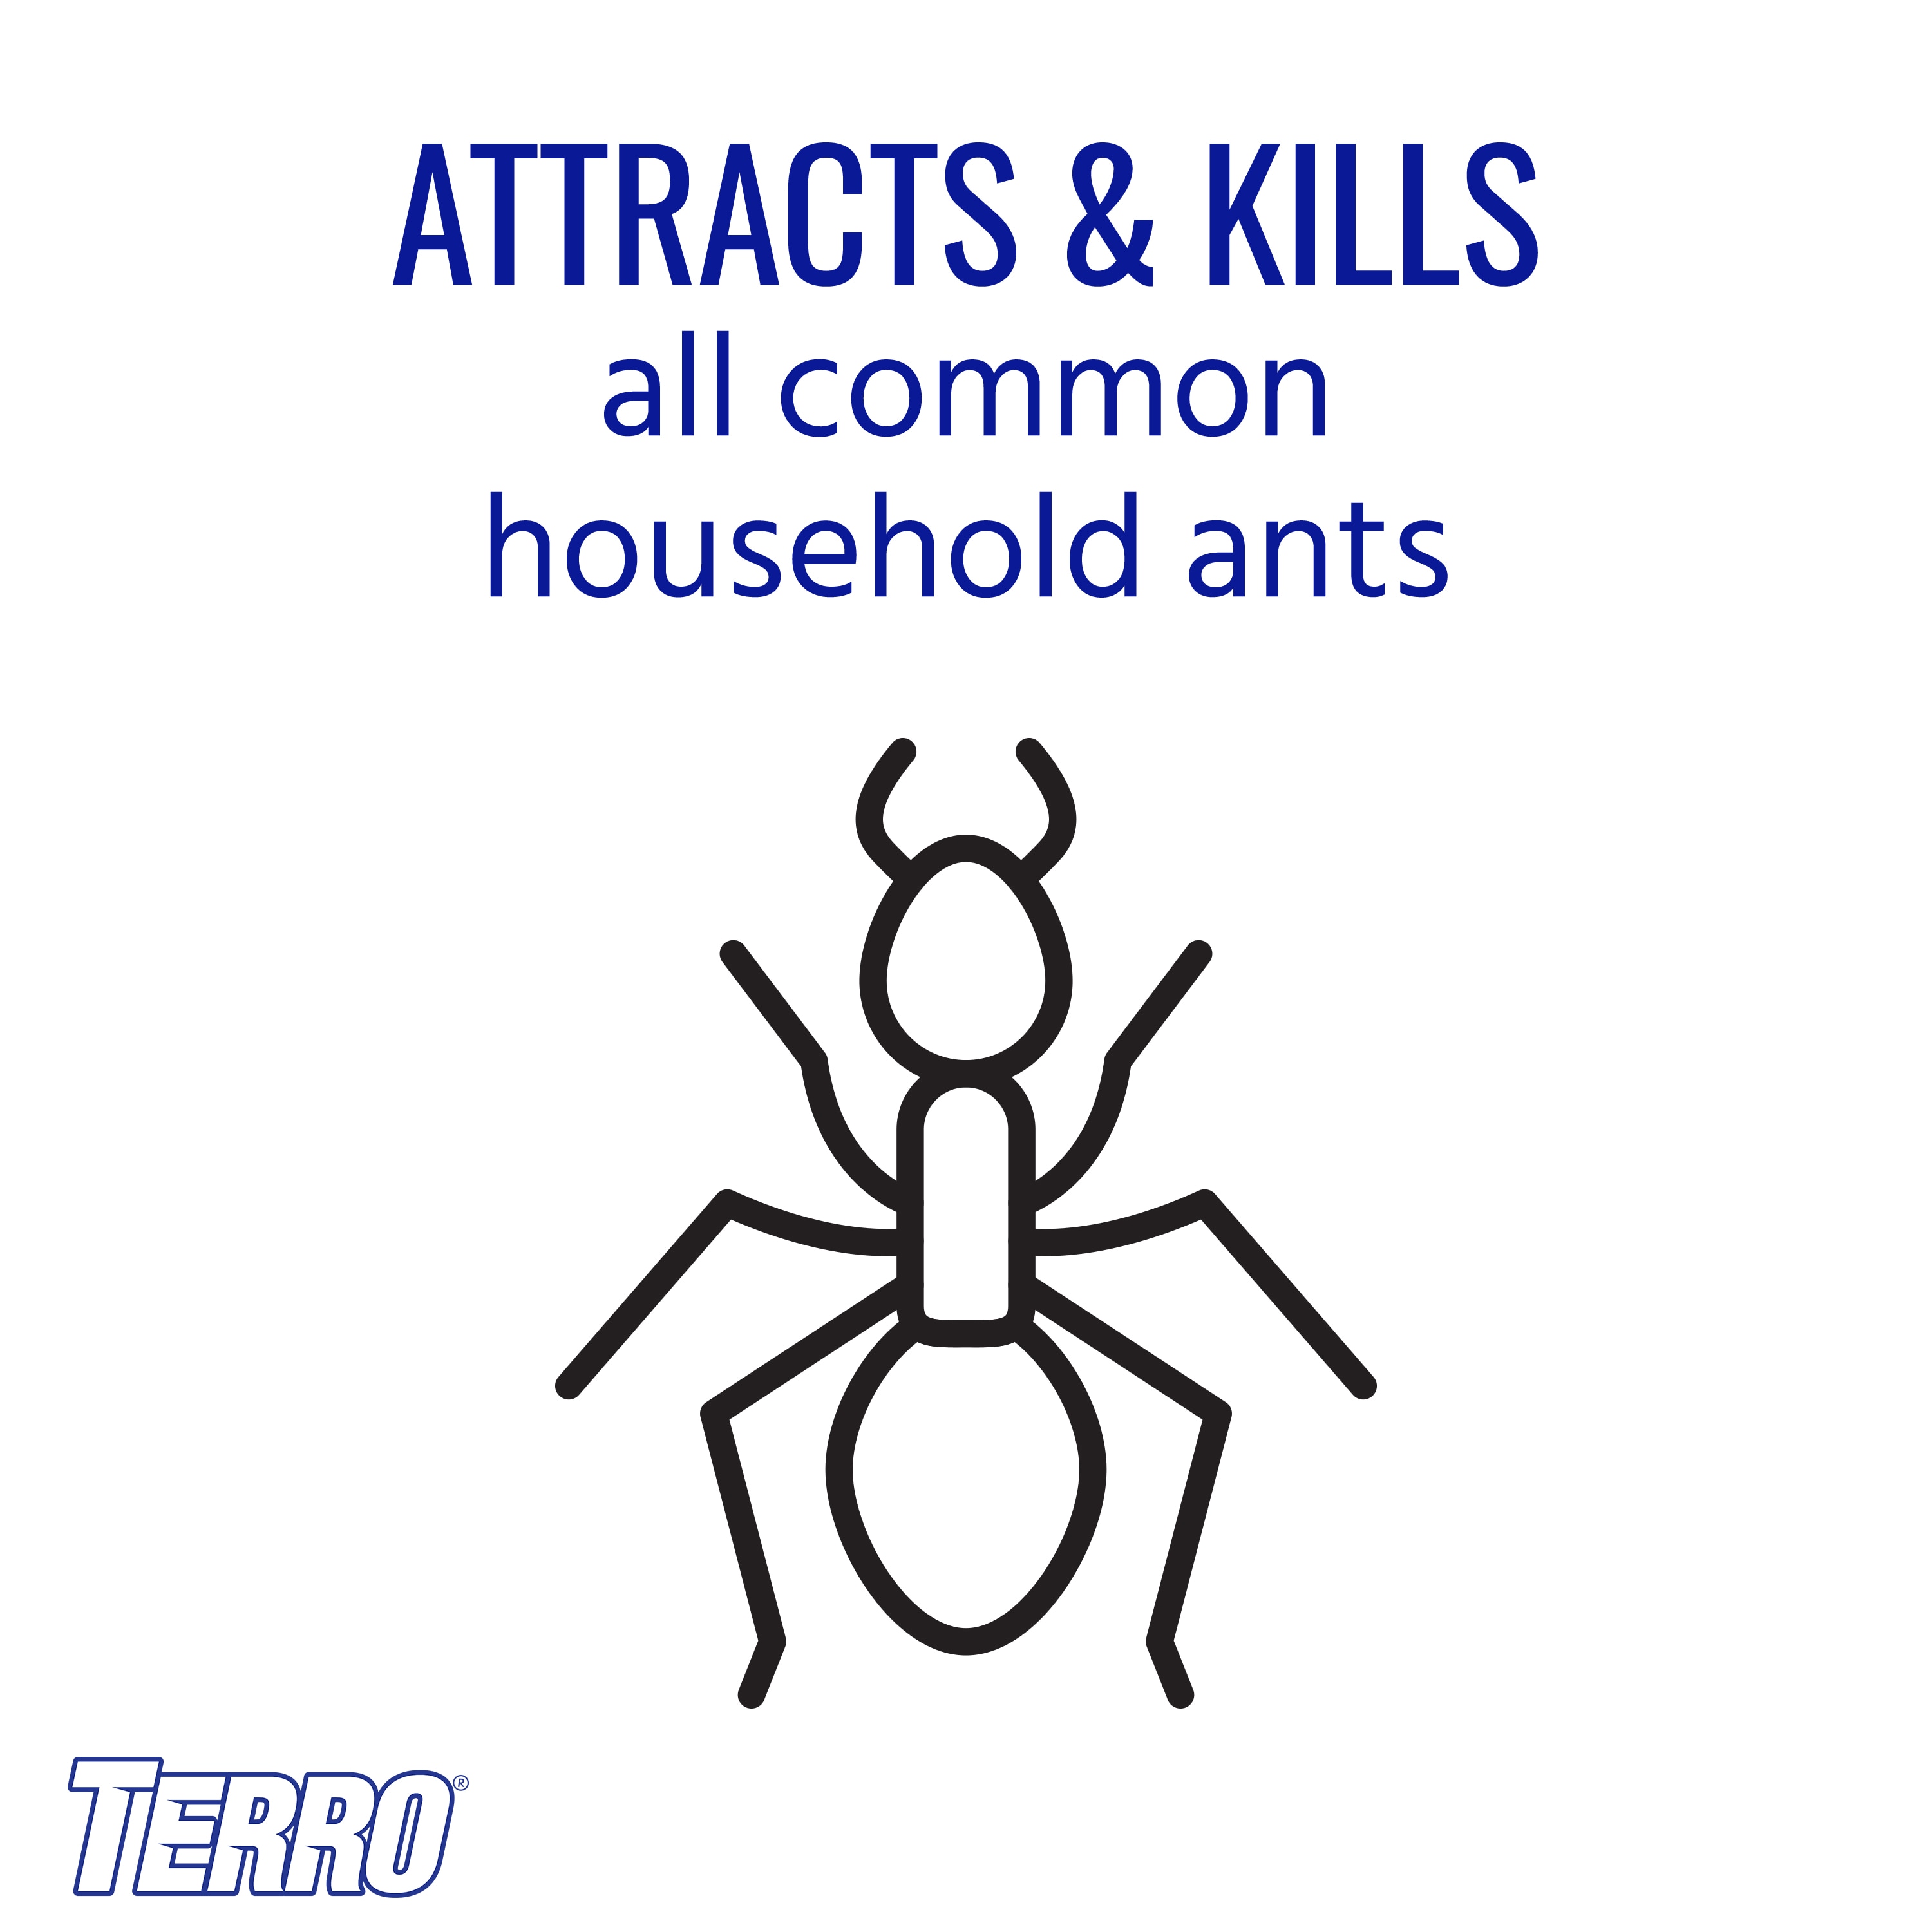 Terro Liquid Ant Bait 6pk - Warren Pipe and Supply